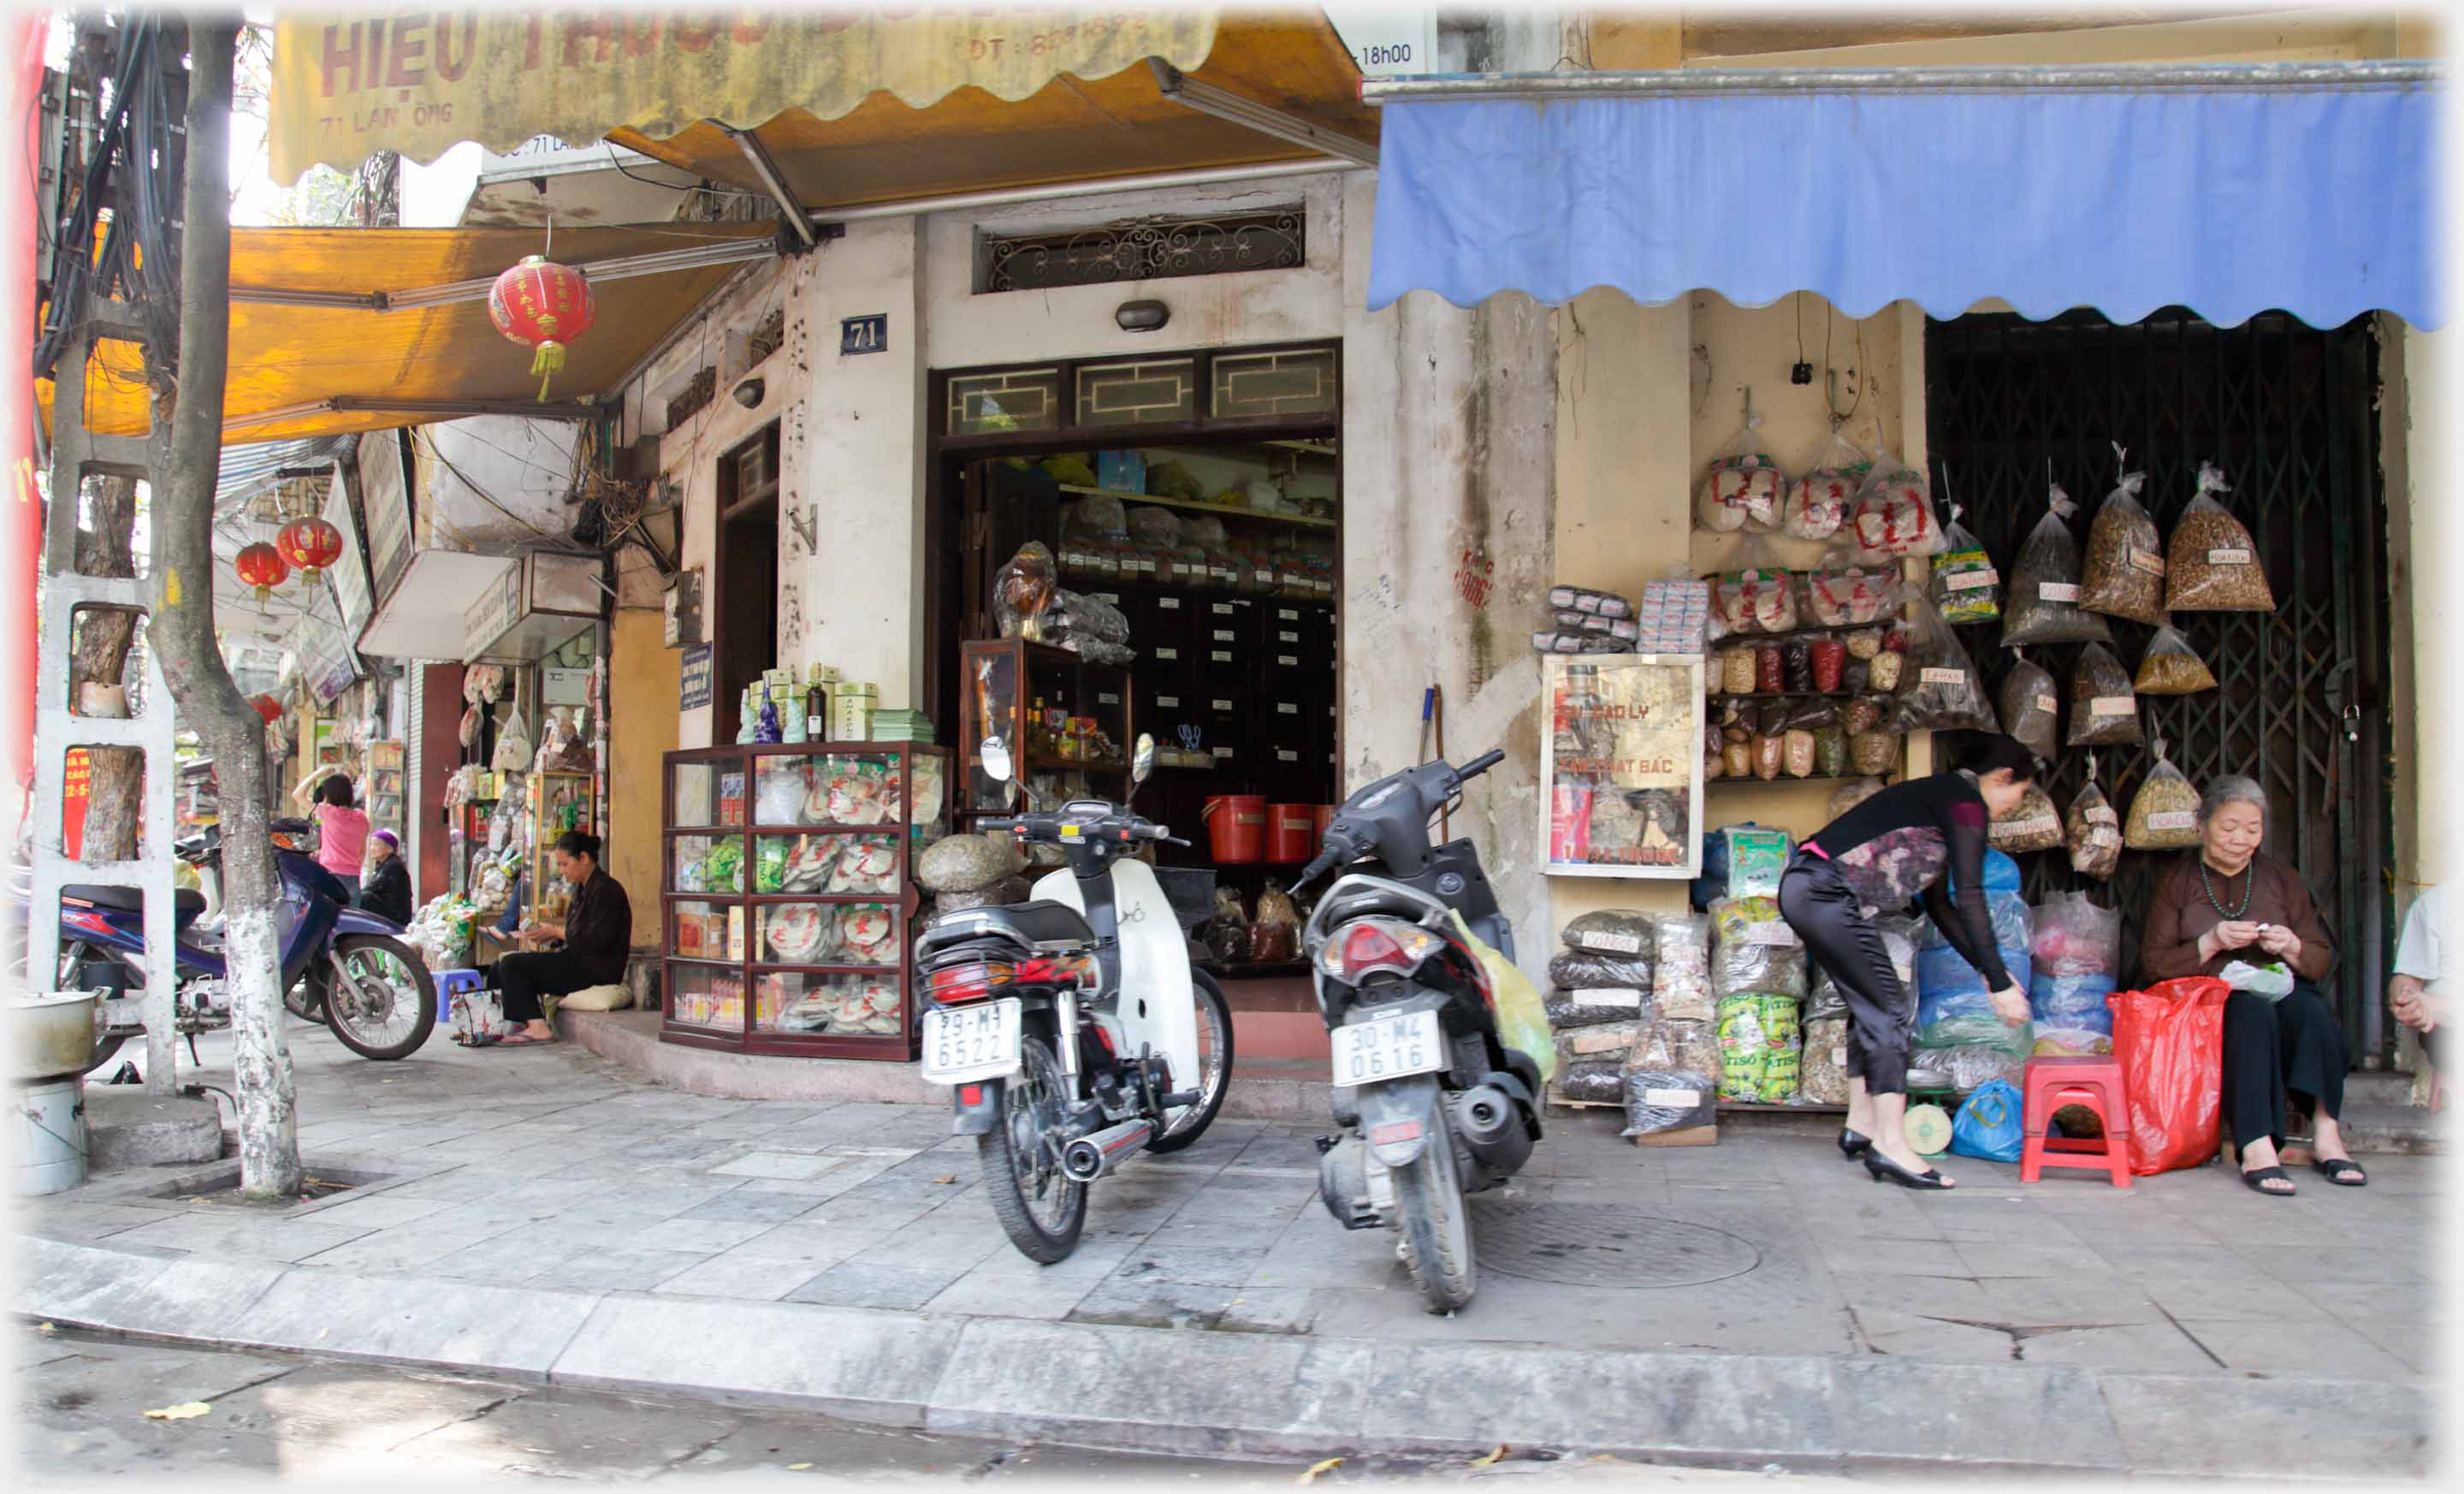 Street corner of shops, motorbikes parked.